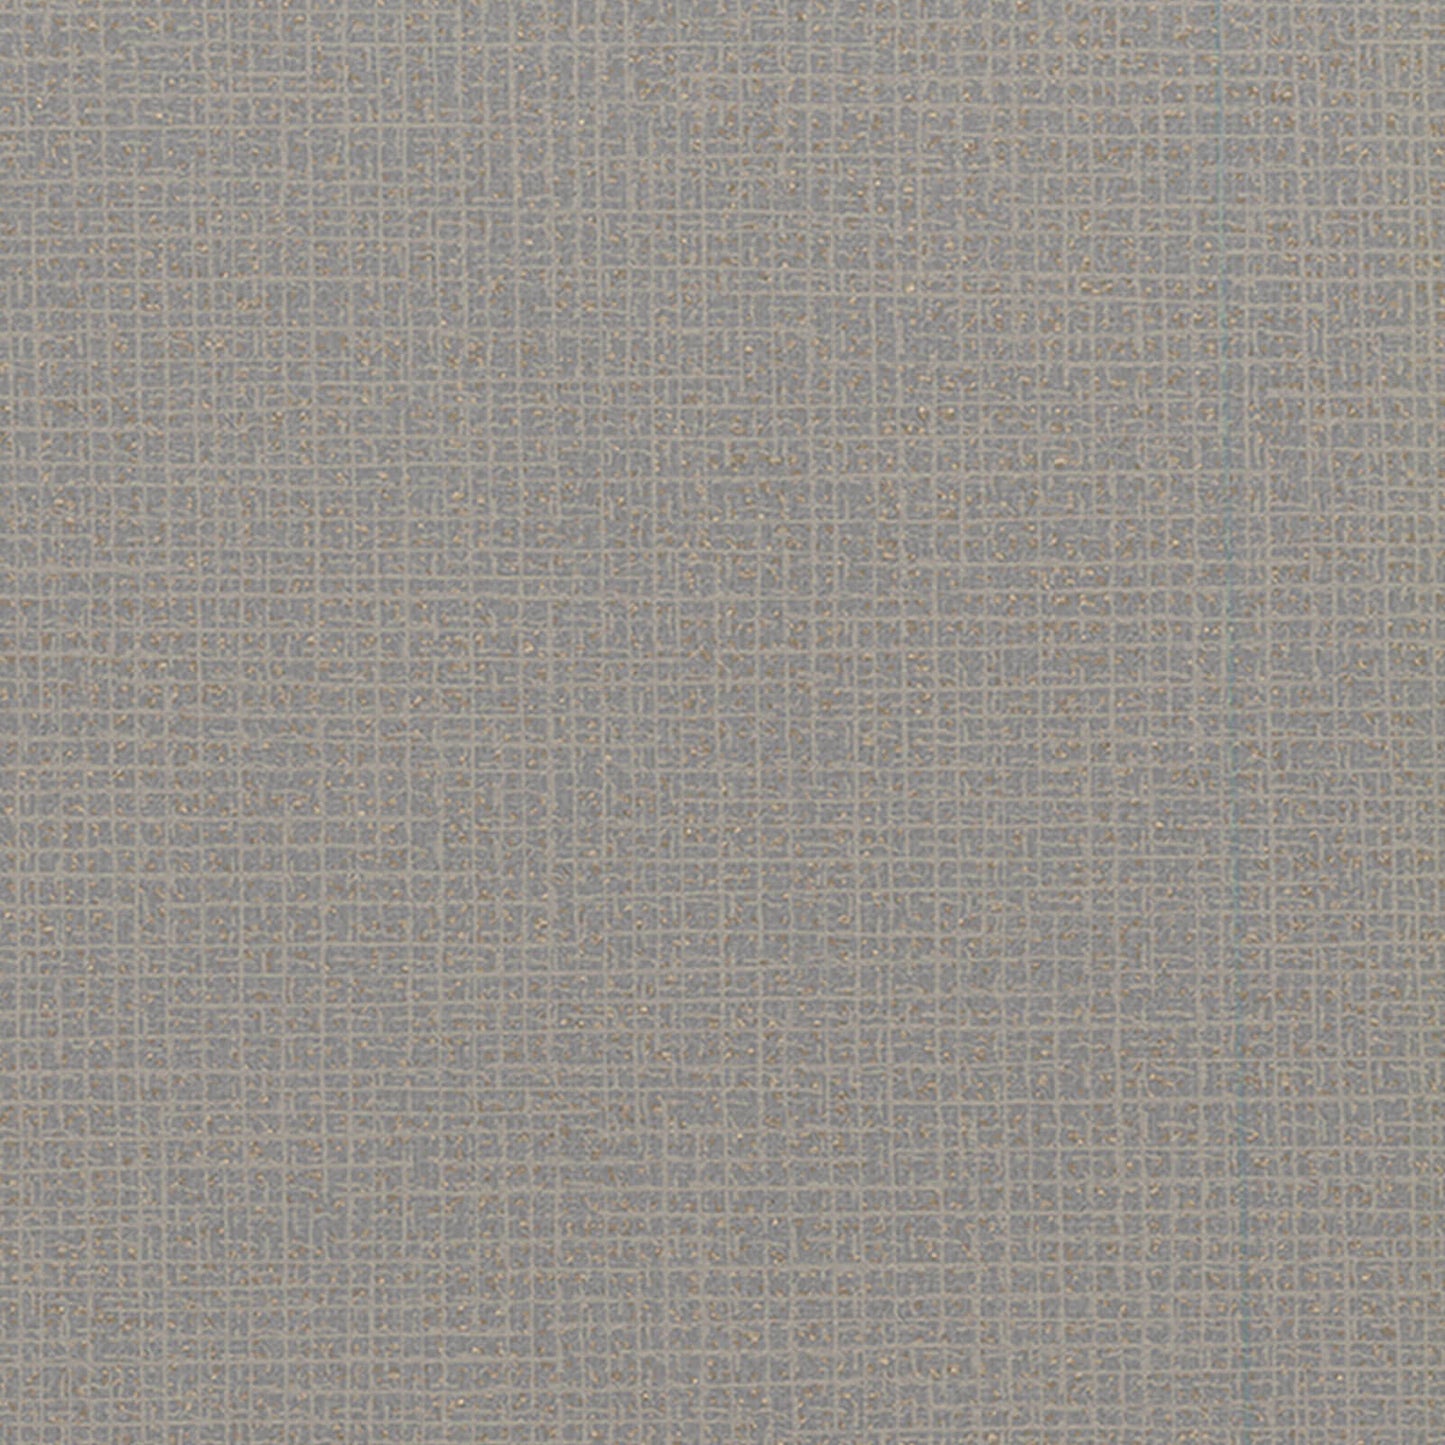 Stacy Garcia Moderne Randing Weave Wallpaper - Dark Gray